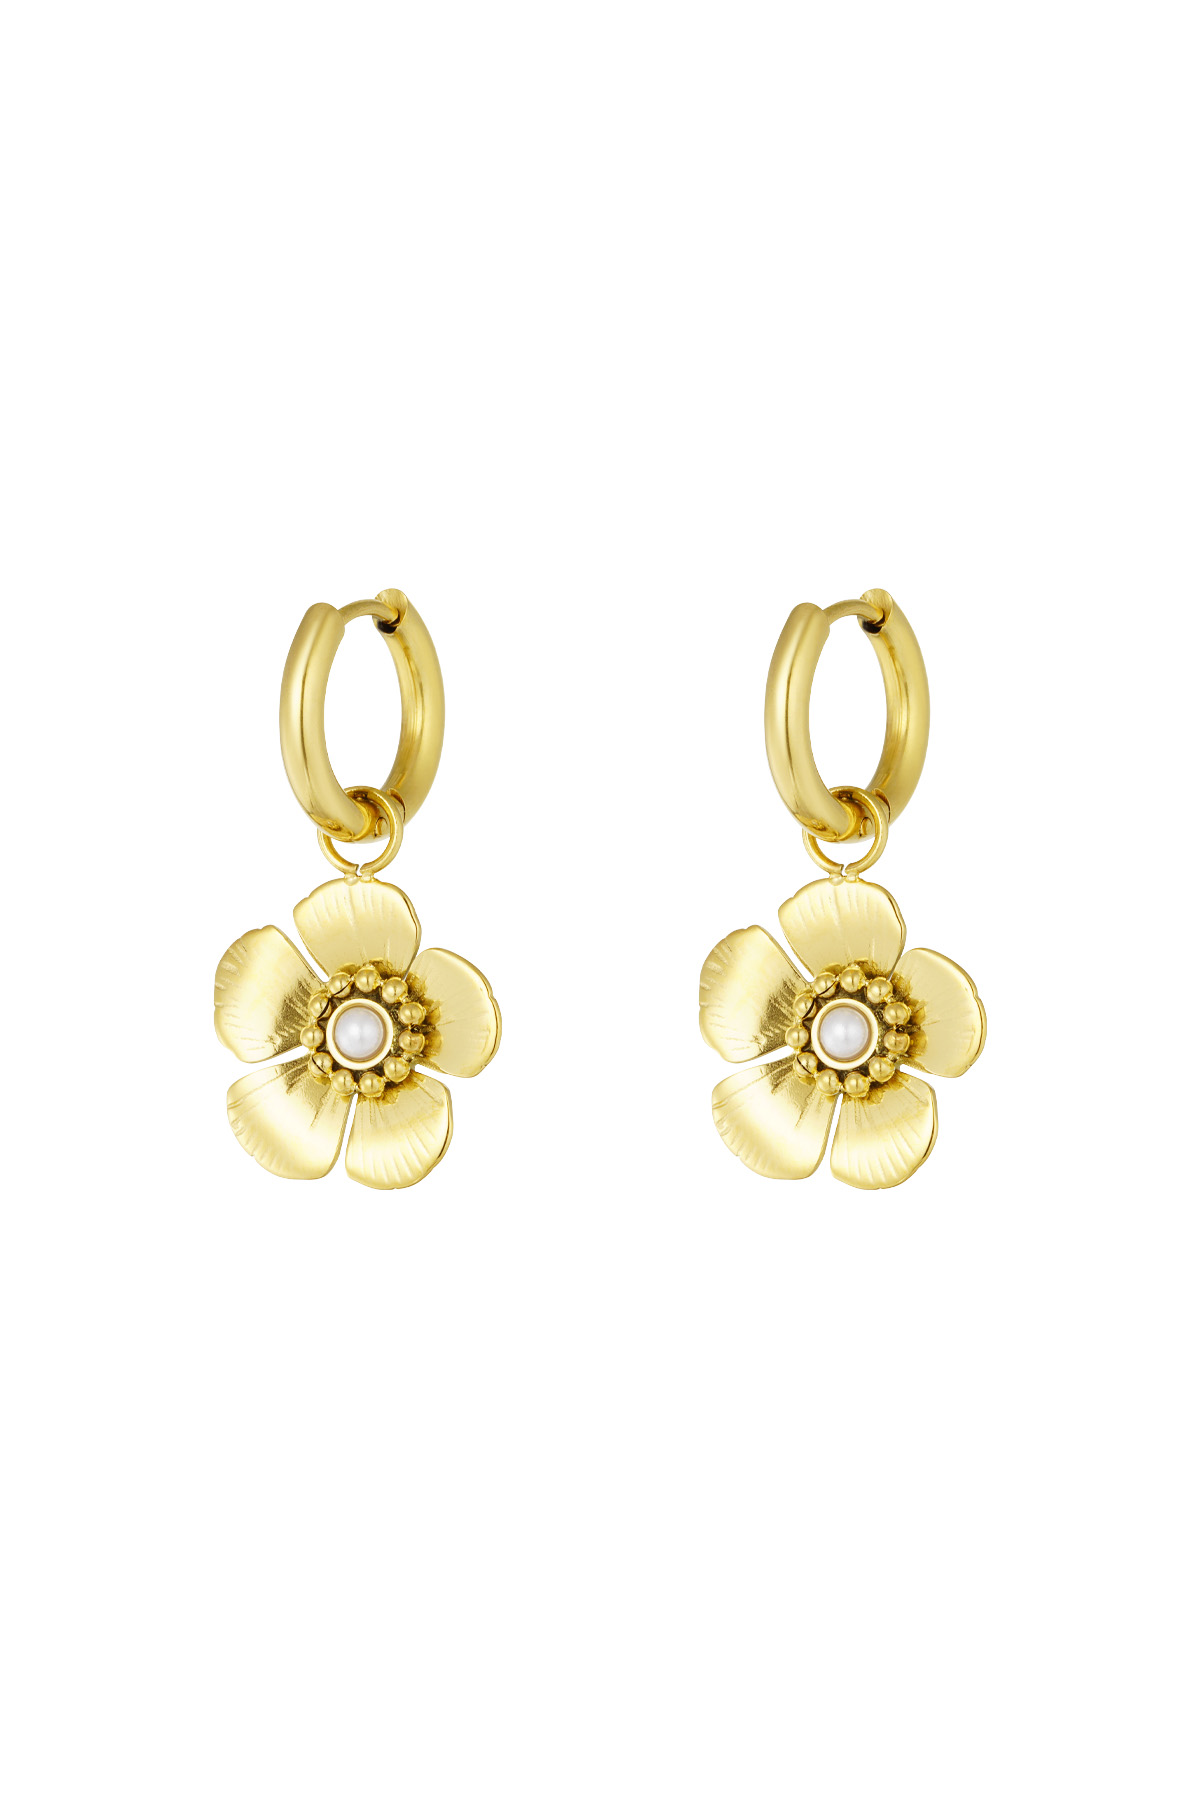 Ohrring mit süßem Blumenanhänger - Gold 